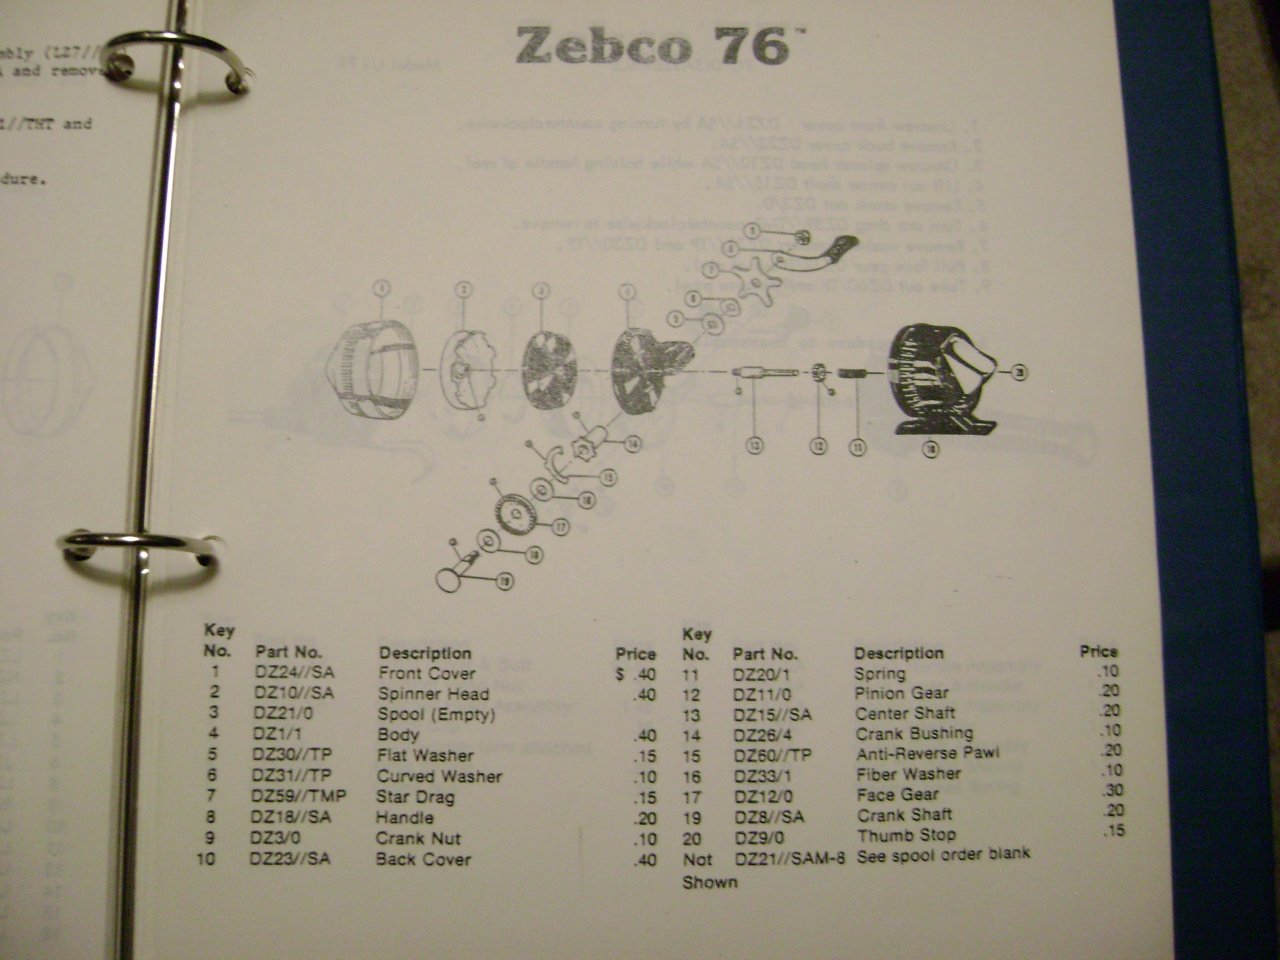 The Zebco Model 76